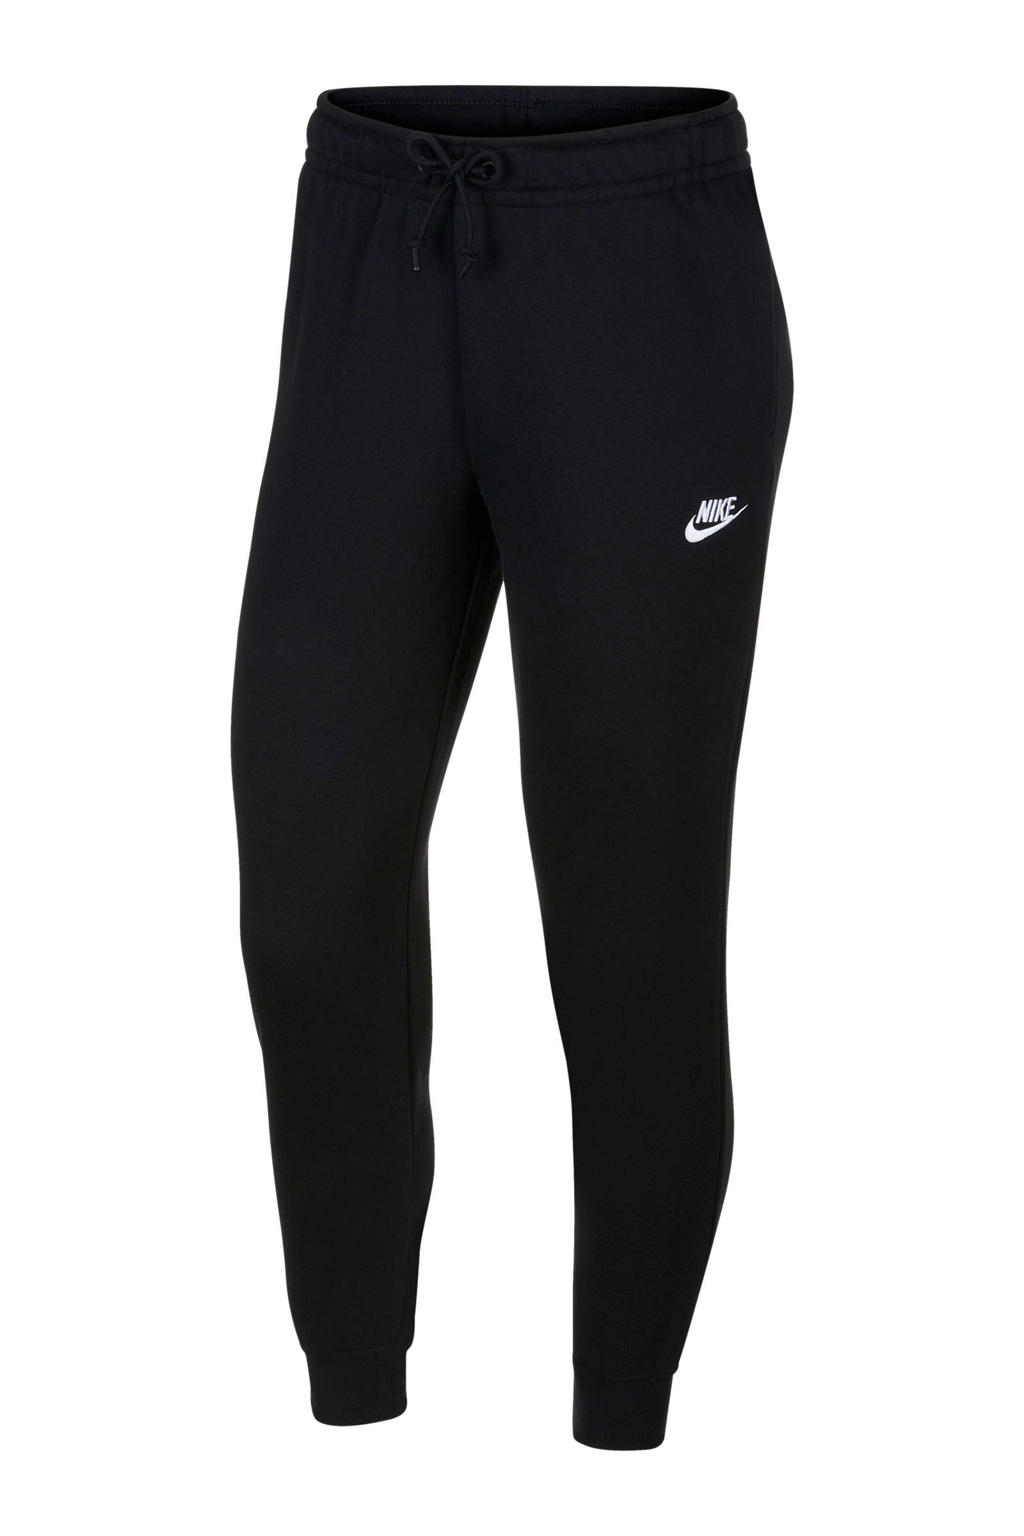 Nike joggingbroek zwart